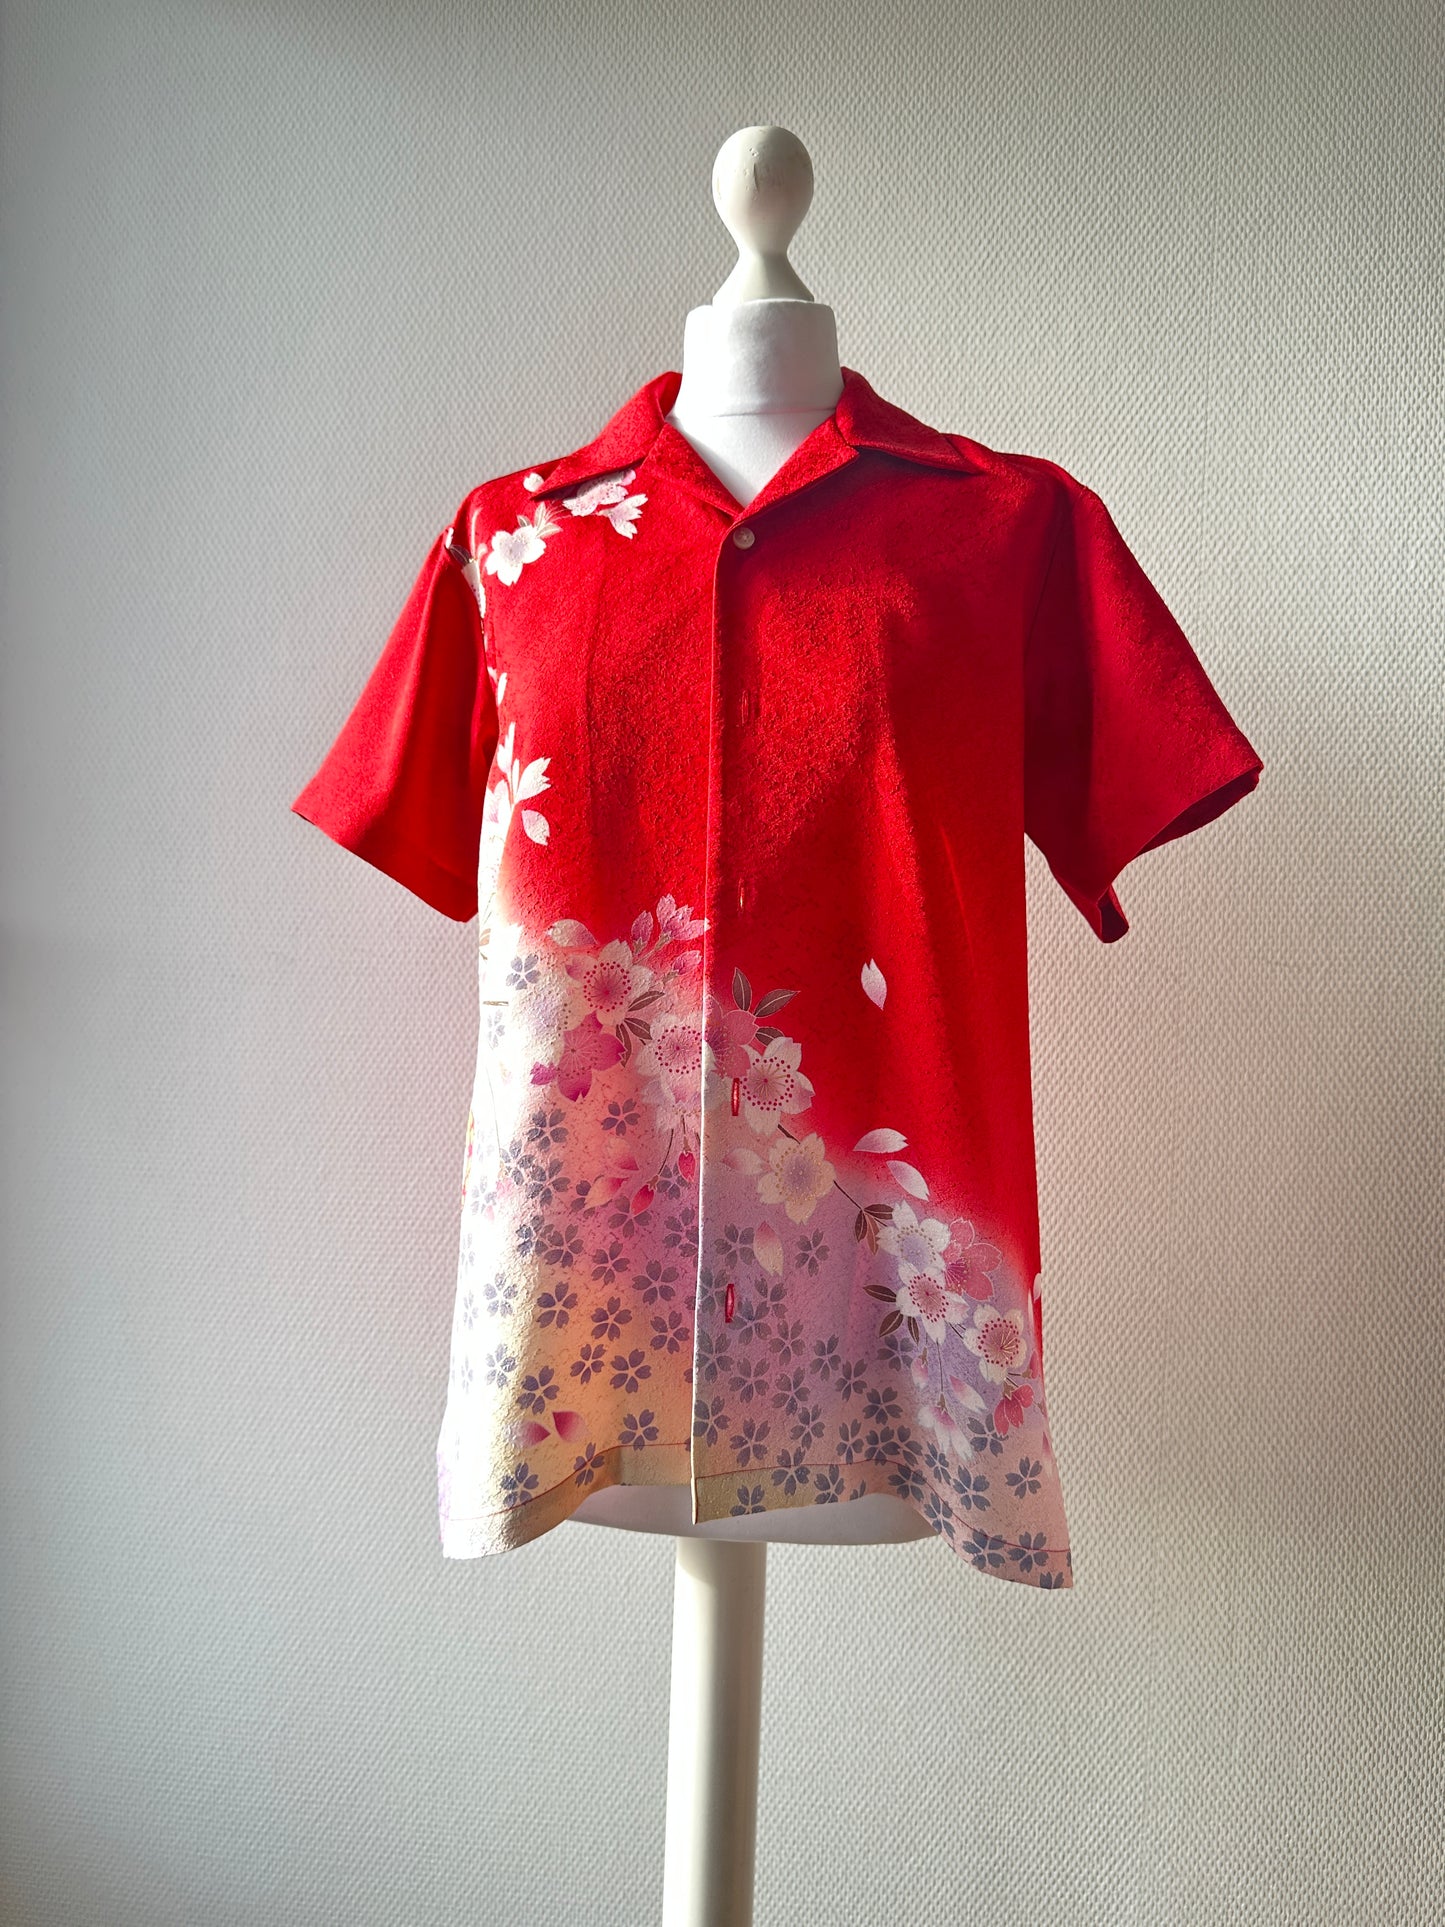 【Deep Red,CherryBlossom】Hawaiian shirt/Size:S＜New・Silk＞For Men,For Women,For kids,Japanese kimono,Japan unisexese Clothing,unisex,Japanese Gifts,Original Item